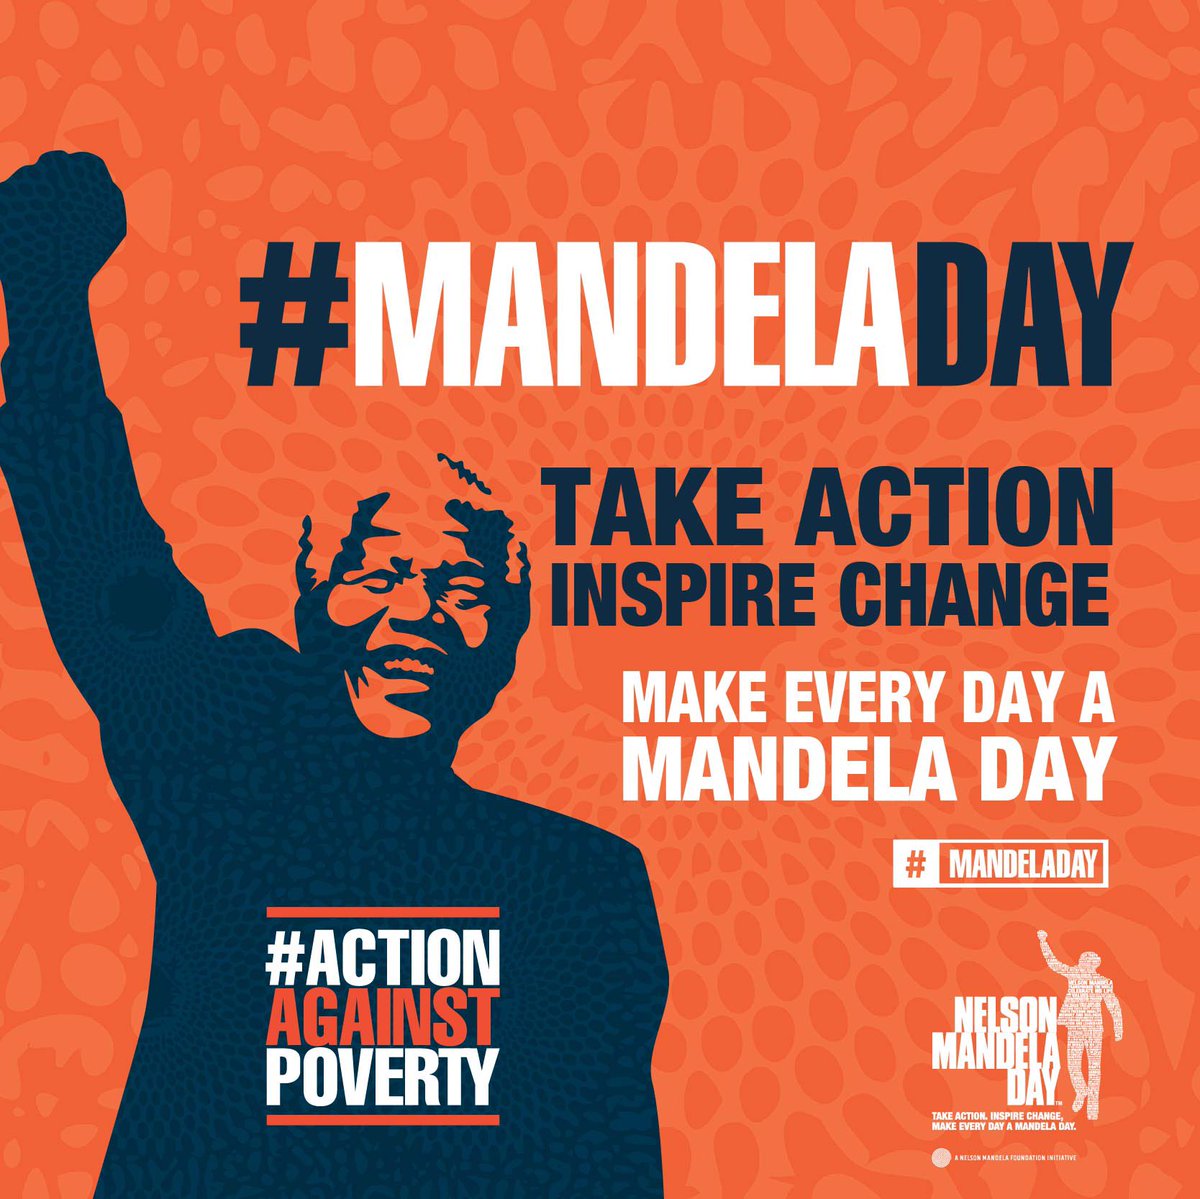 #MandelaDay2021 
#ActionAgainstPoverty